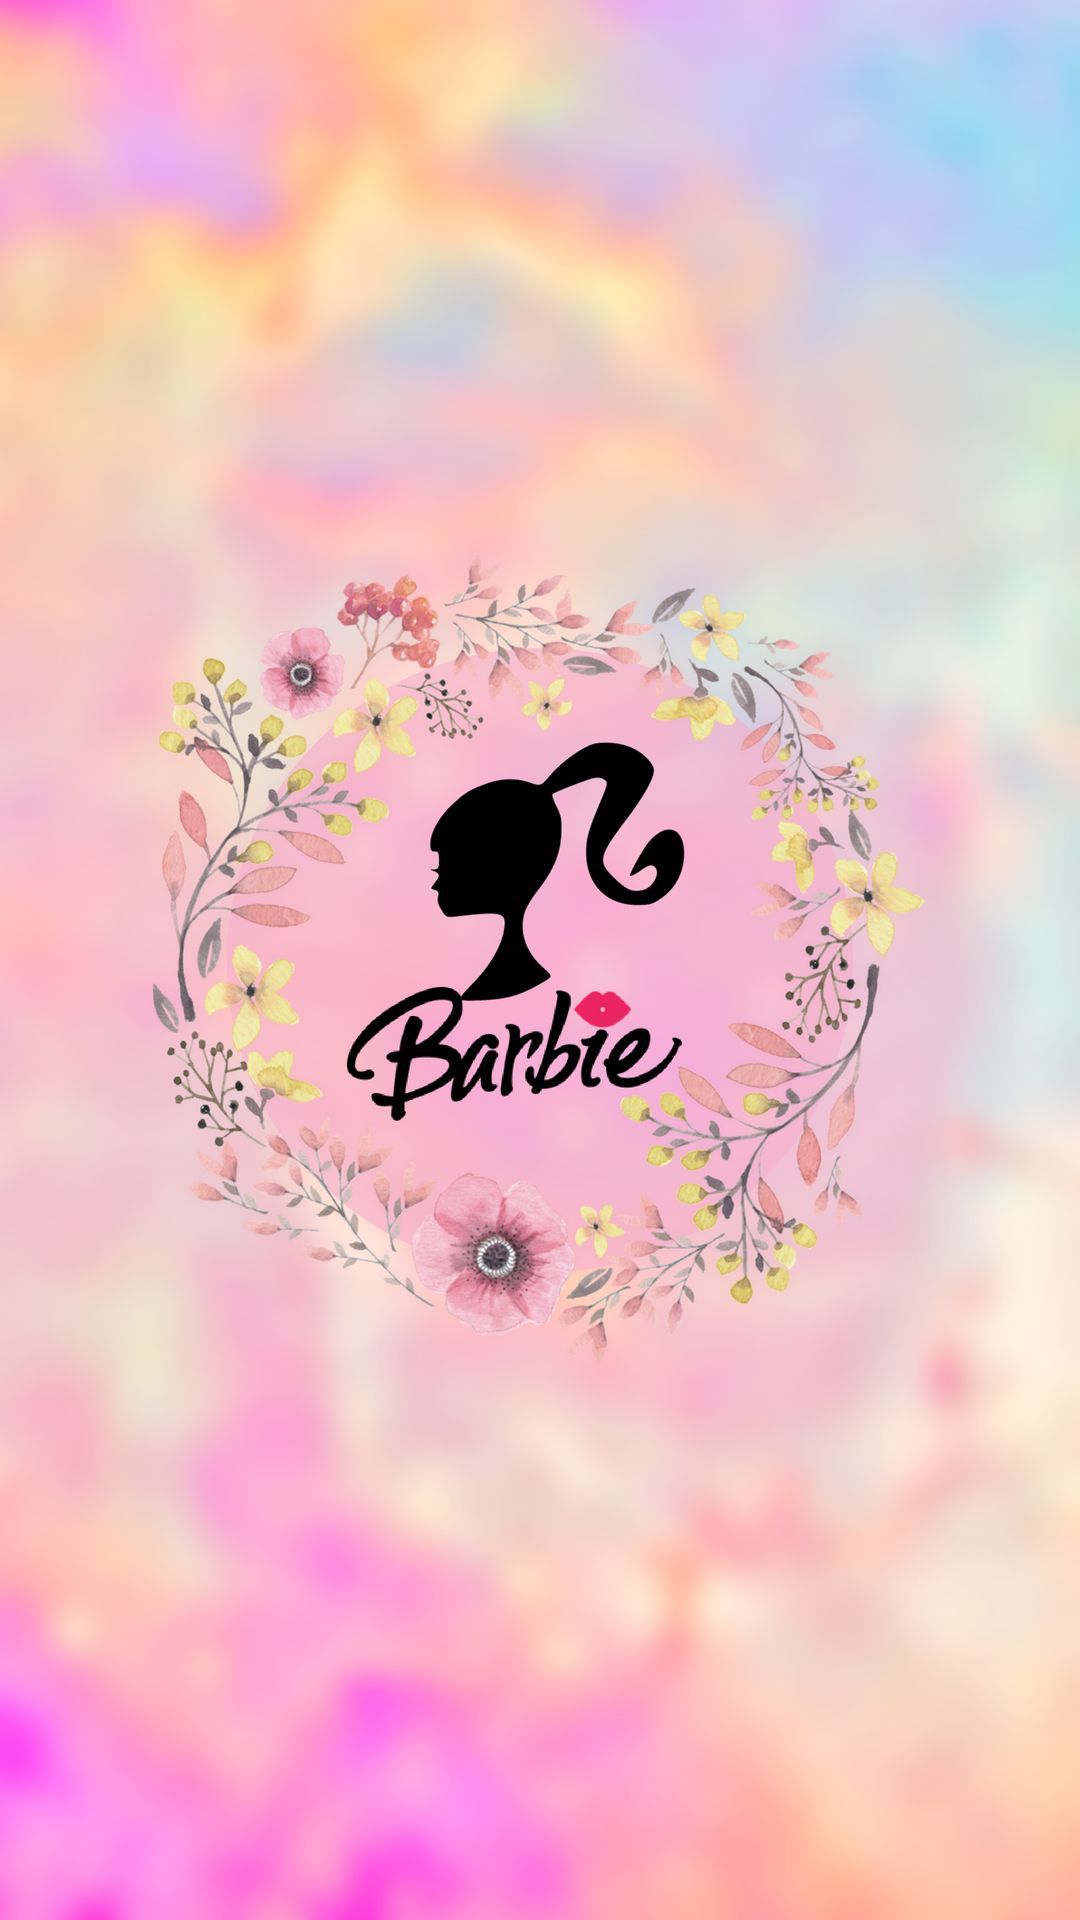 Barbie Wallpaper for mobile phone